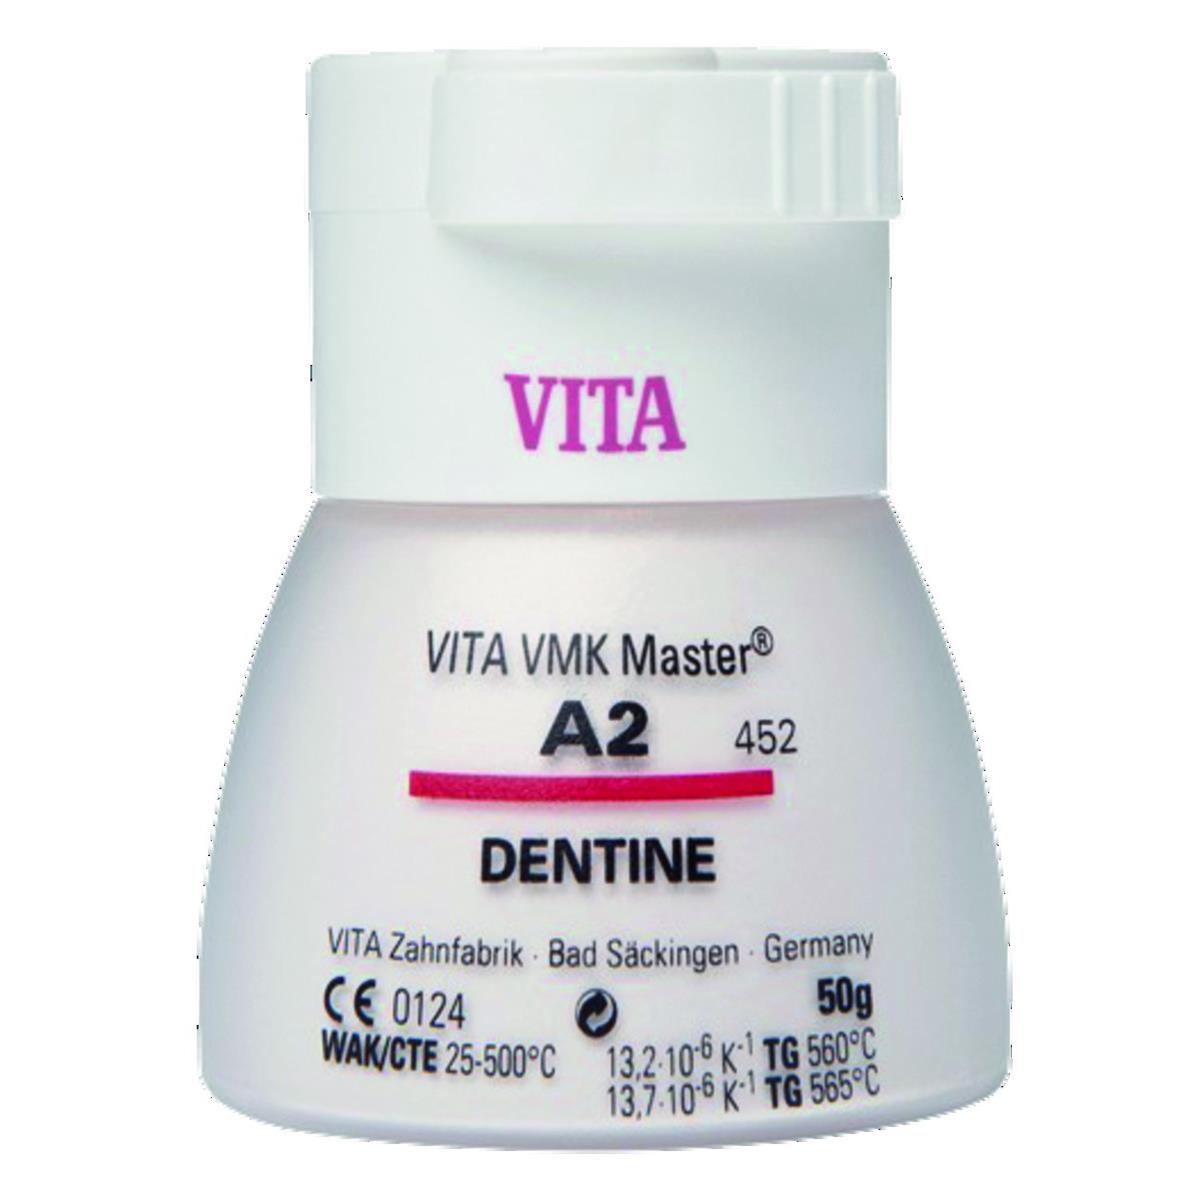 VMK Master VITA - Dentine - 3L2,5 - Le flacon de 50 g